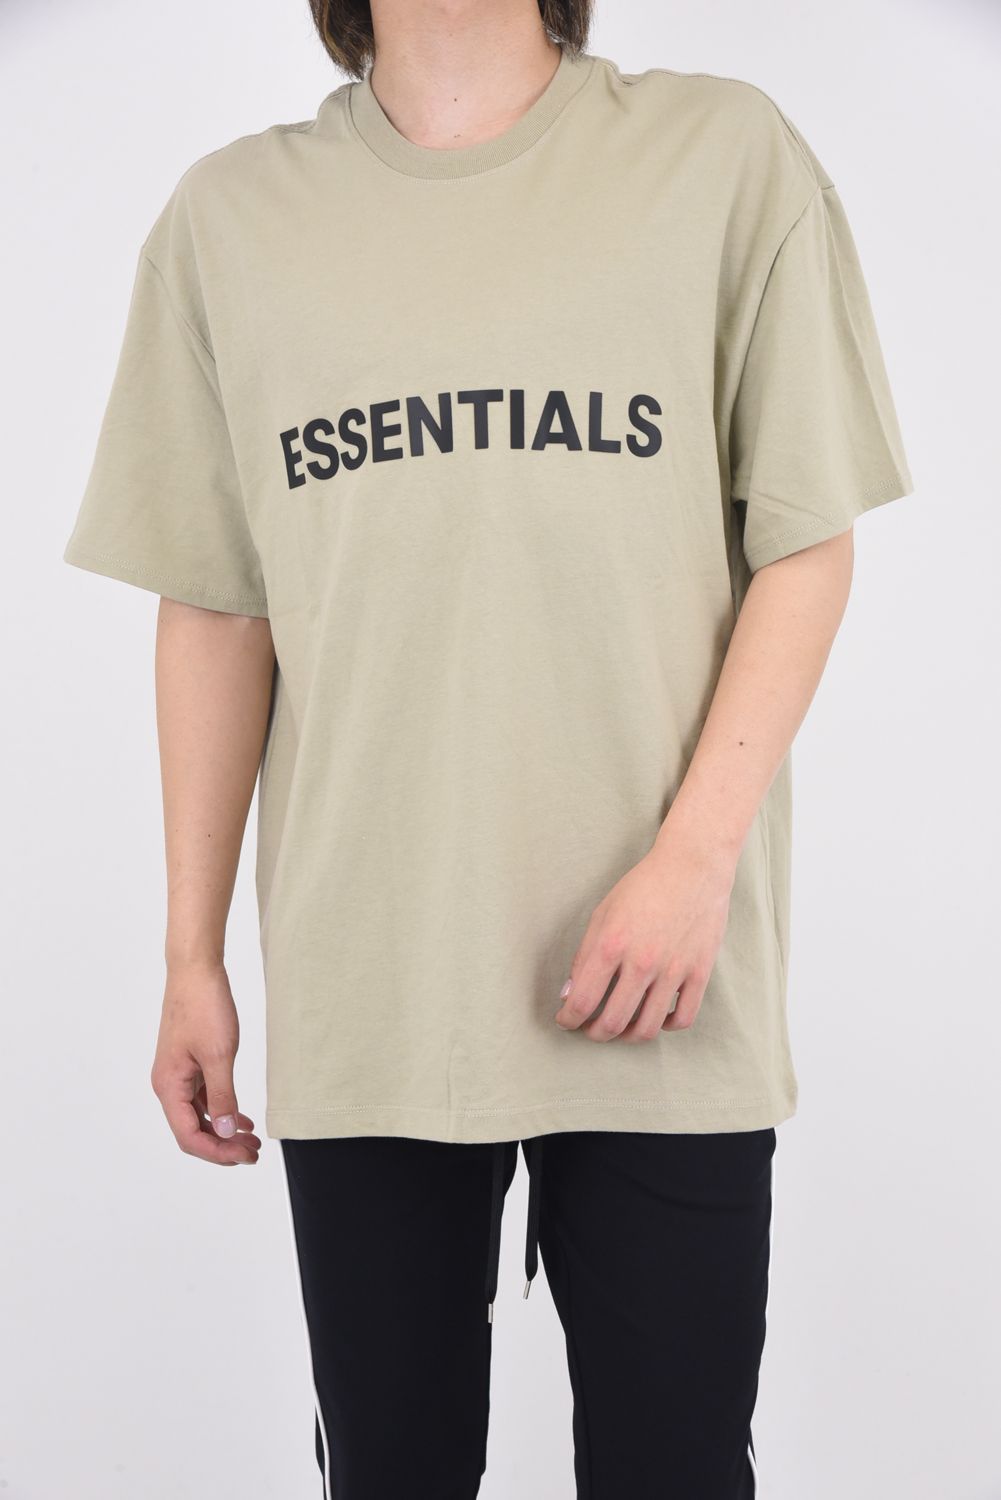 ESSENTIALS FRONT LOGO T-Shirt / フロント ロゴ 半袖 Tシャツ タン - S